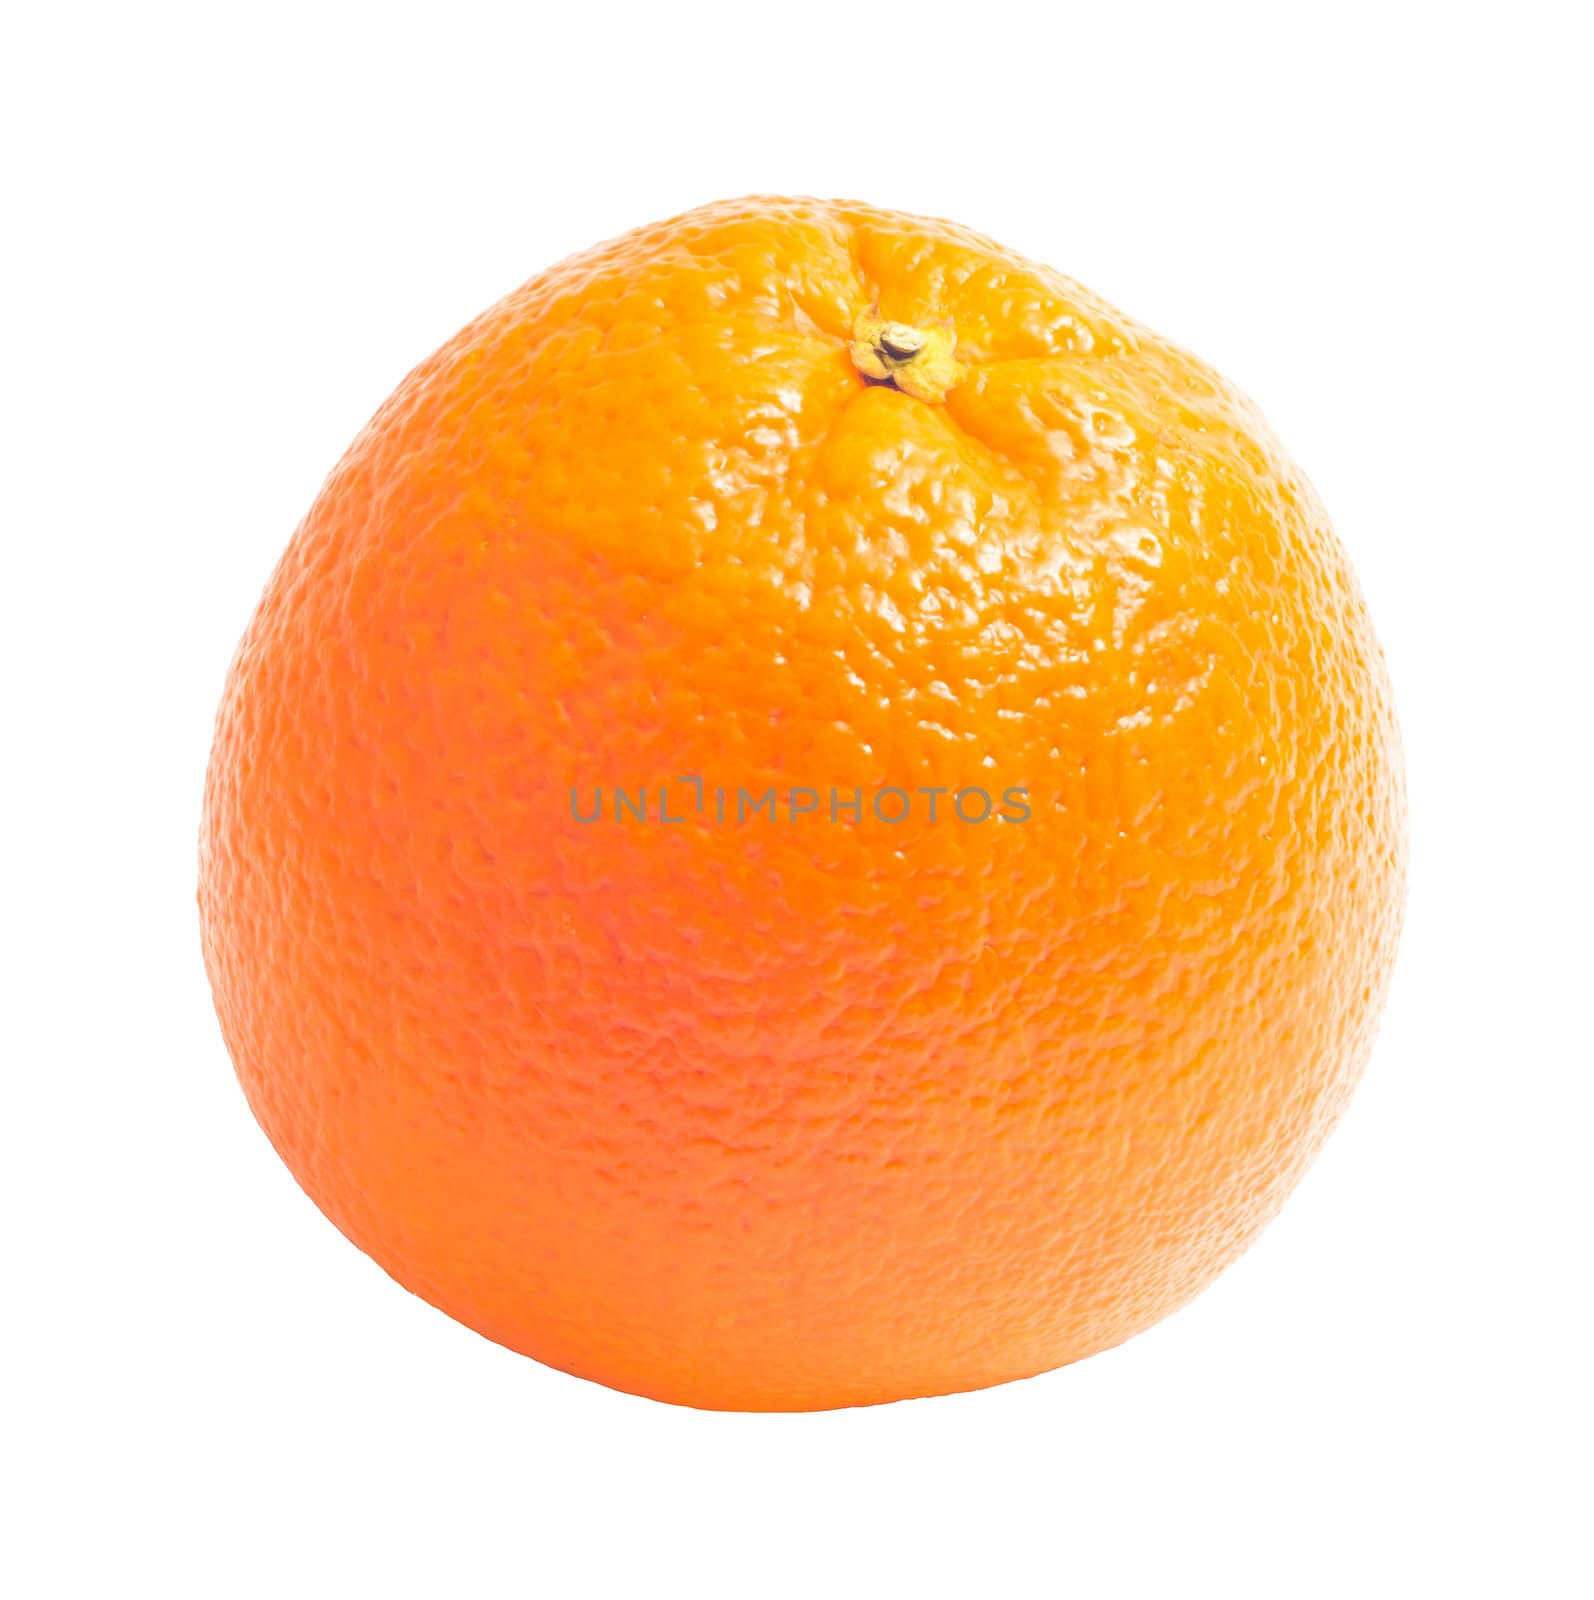 Orange isolated on white background by heinteh